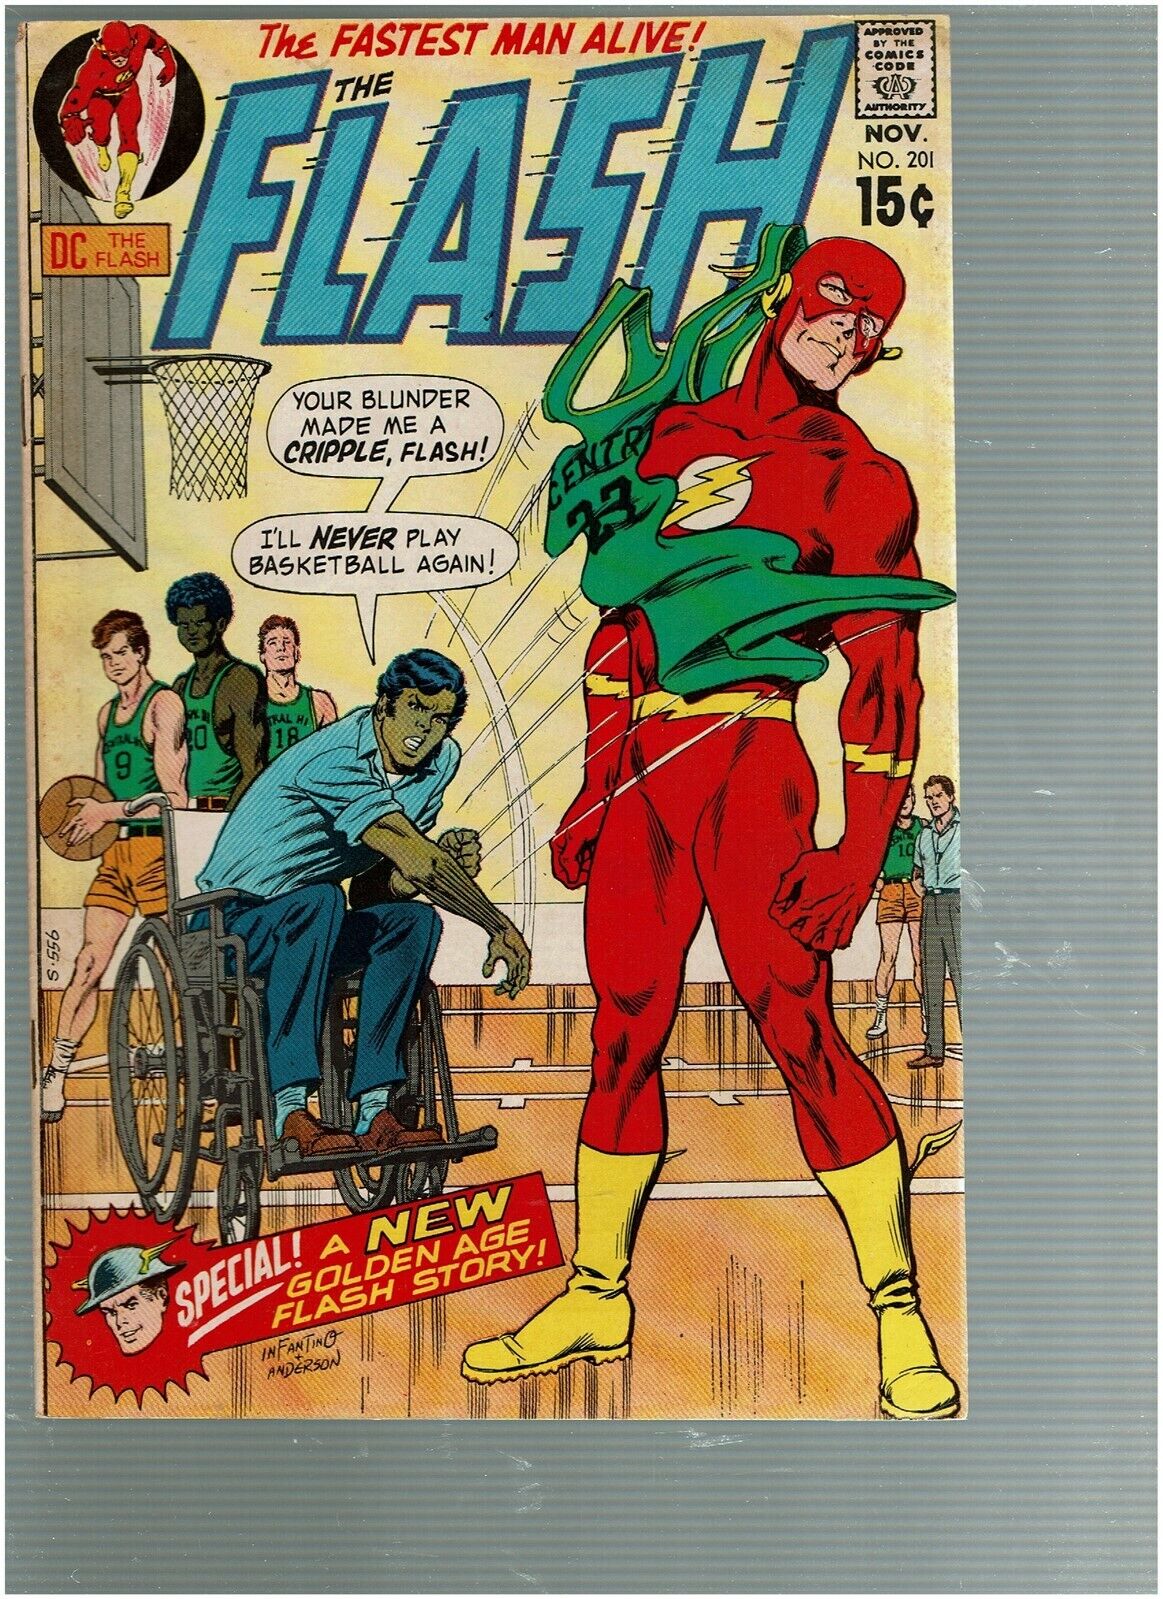 The Flash 201 Flash Golden Age Flash F/VF